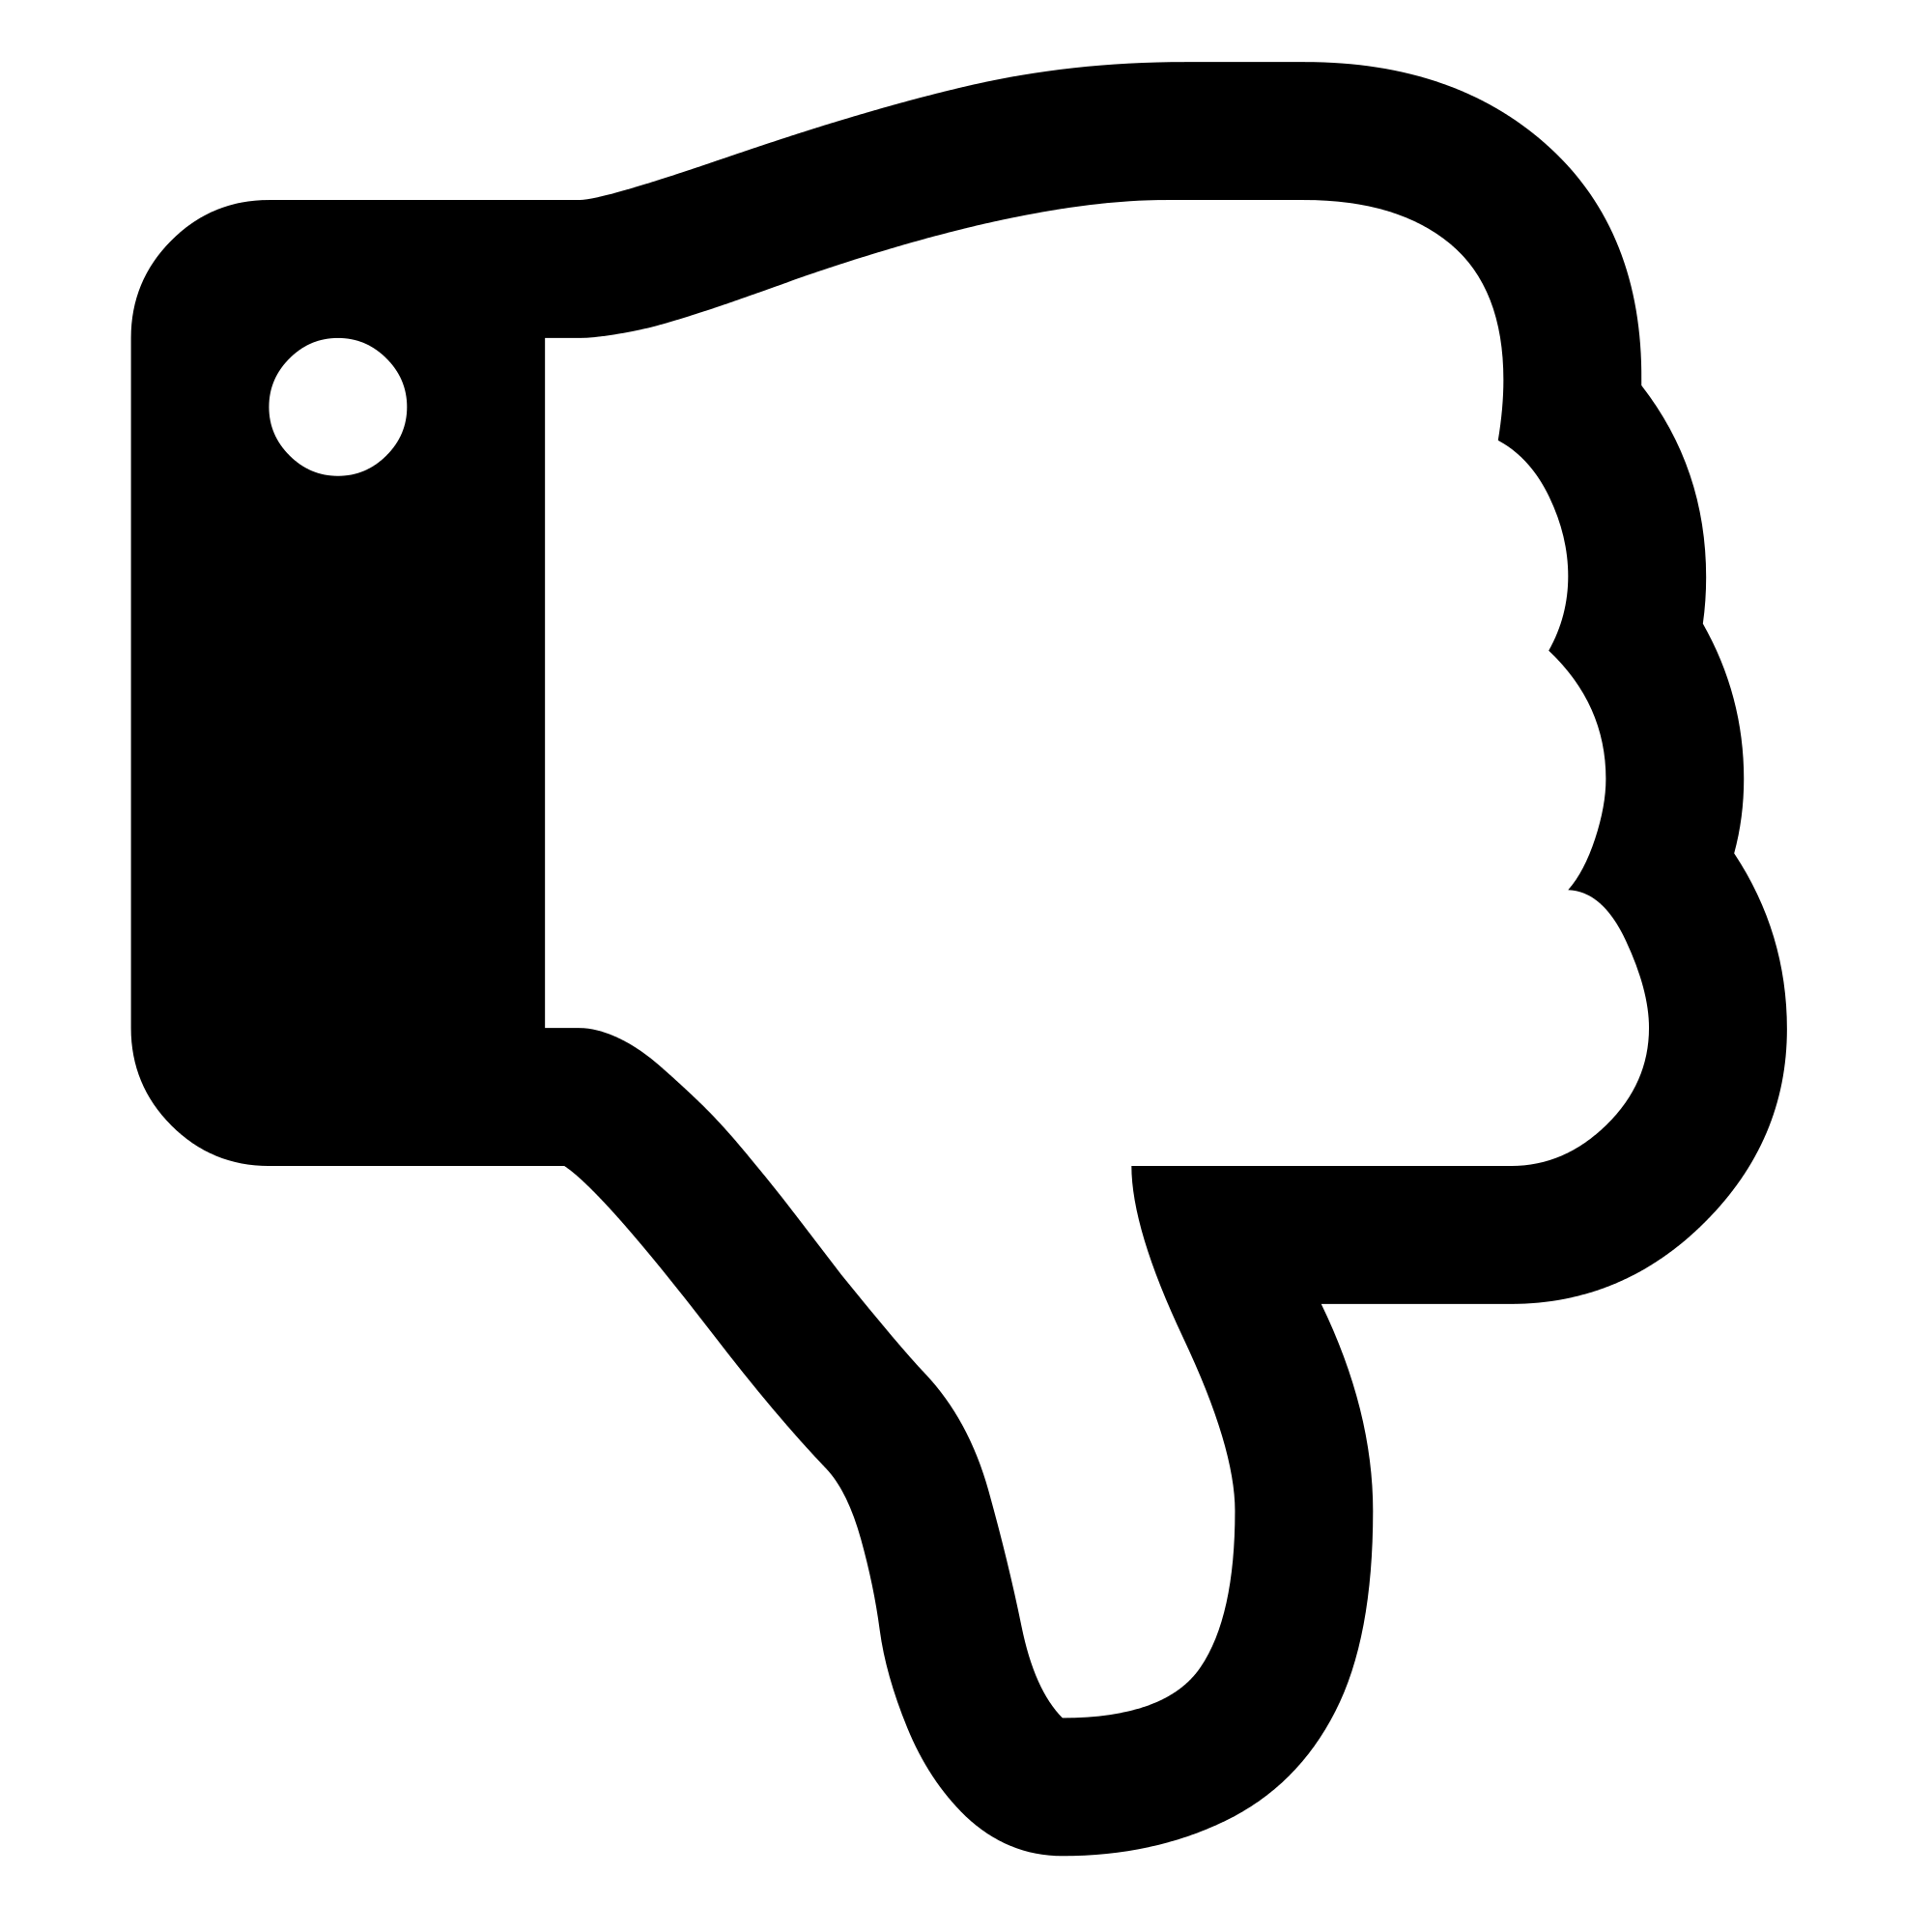 Black and White Dislike Symbol PNG Image